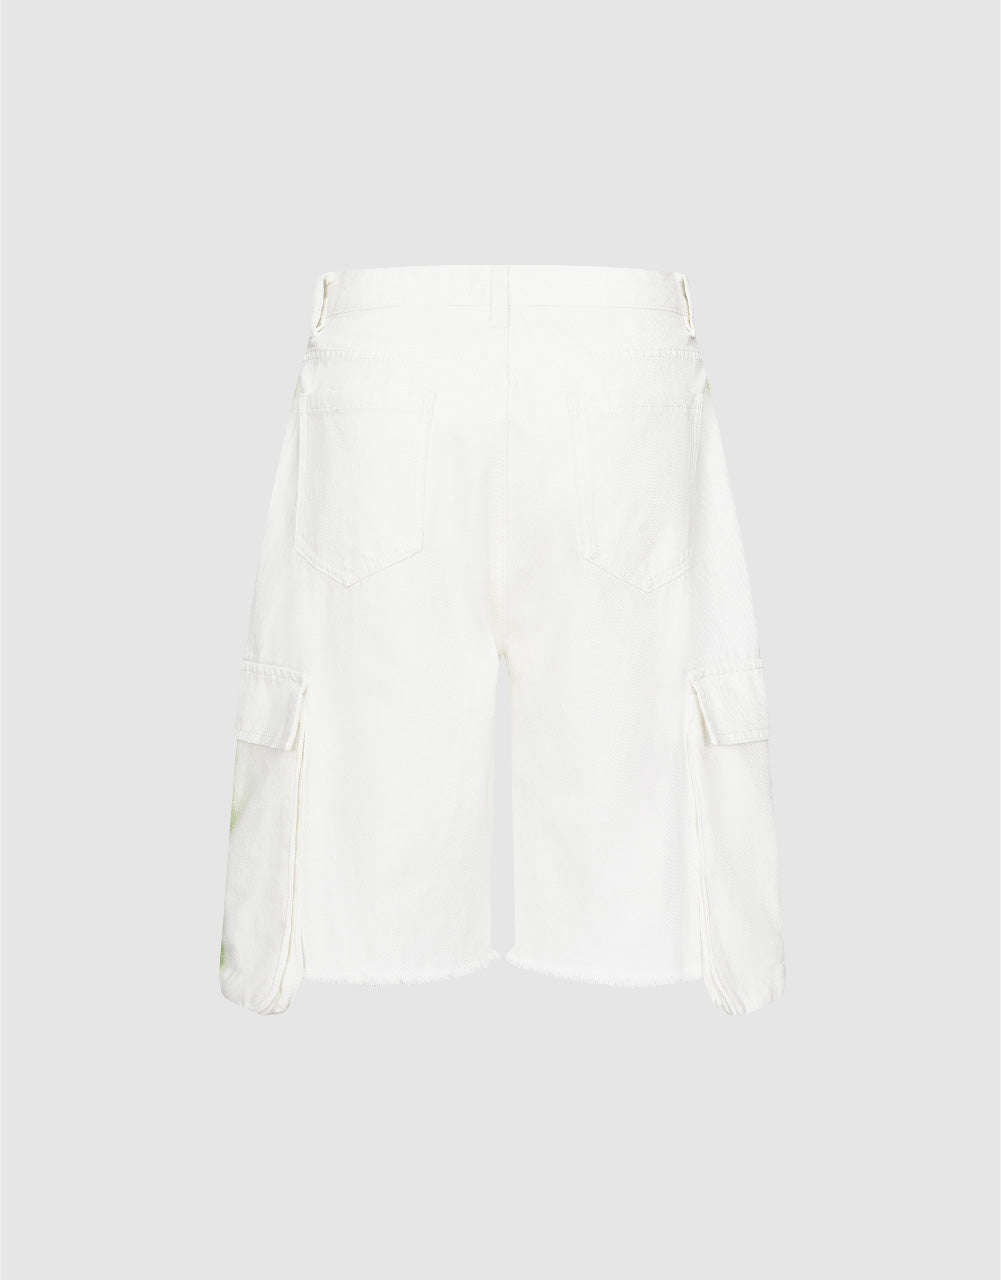 Multi-Pocket Denim Shorts